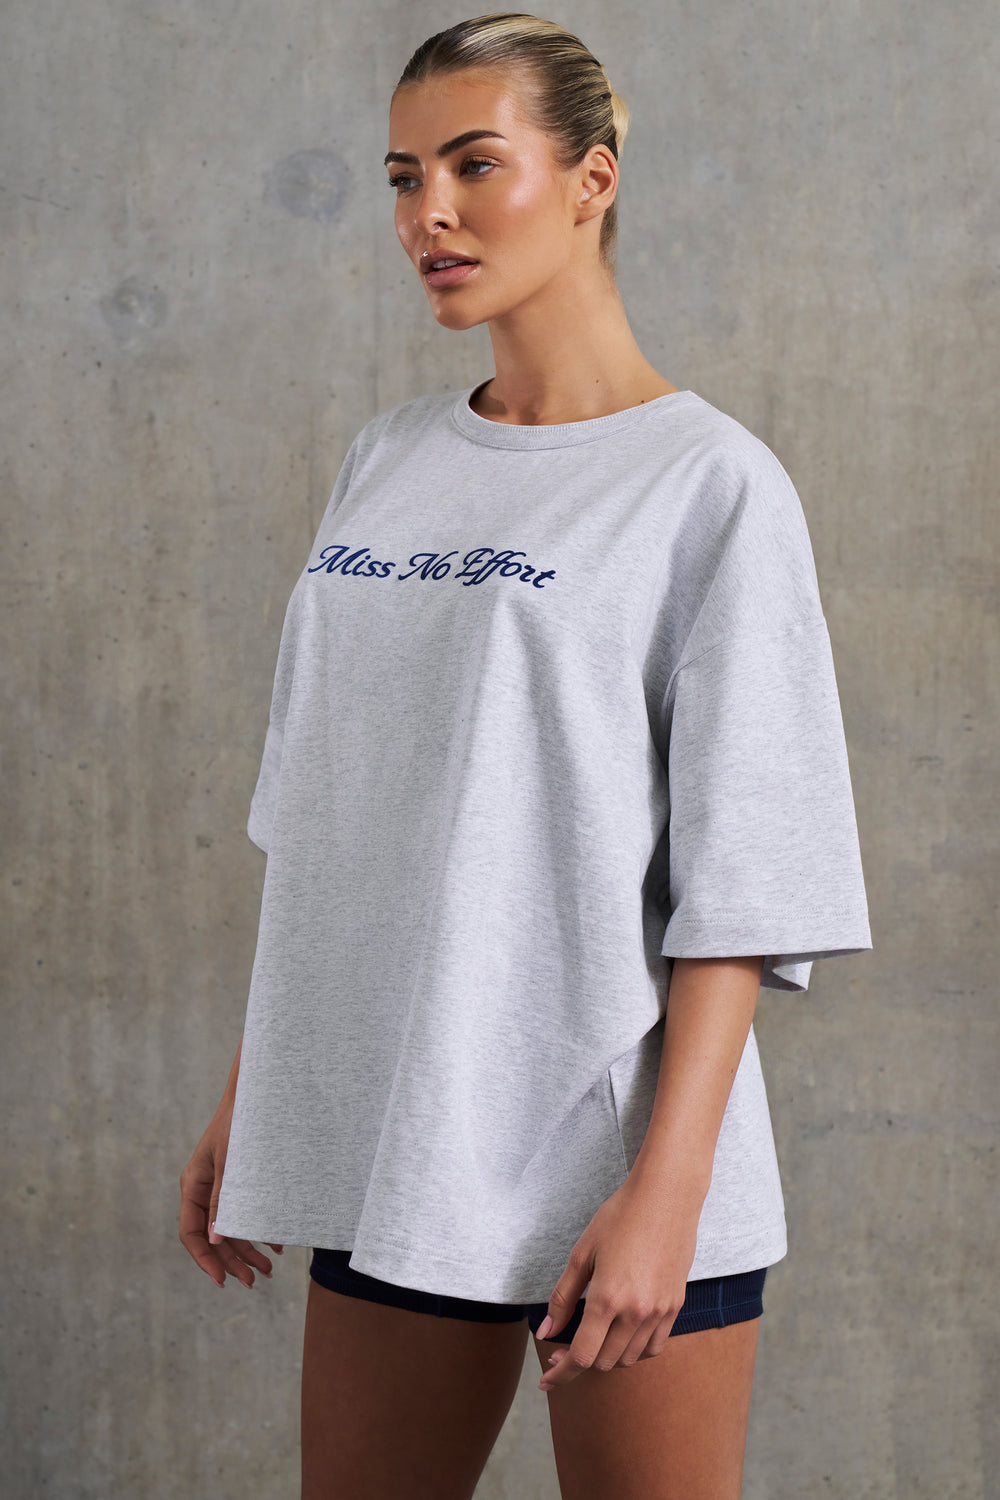 No Effort Oversized Slogan T-Shirt in Grey | Oh Polly – Bo+Tee